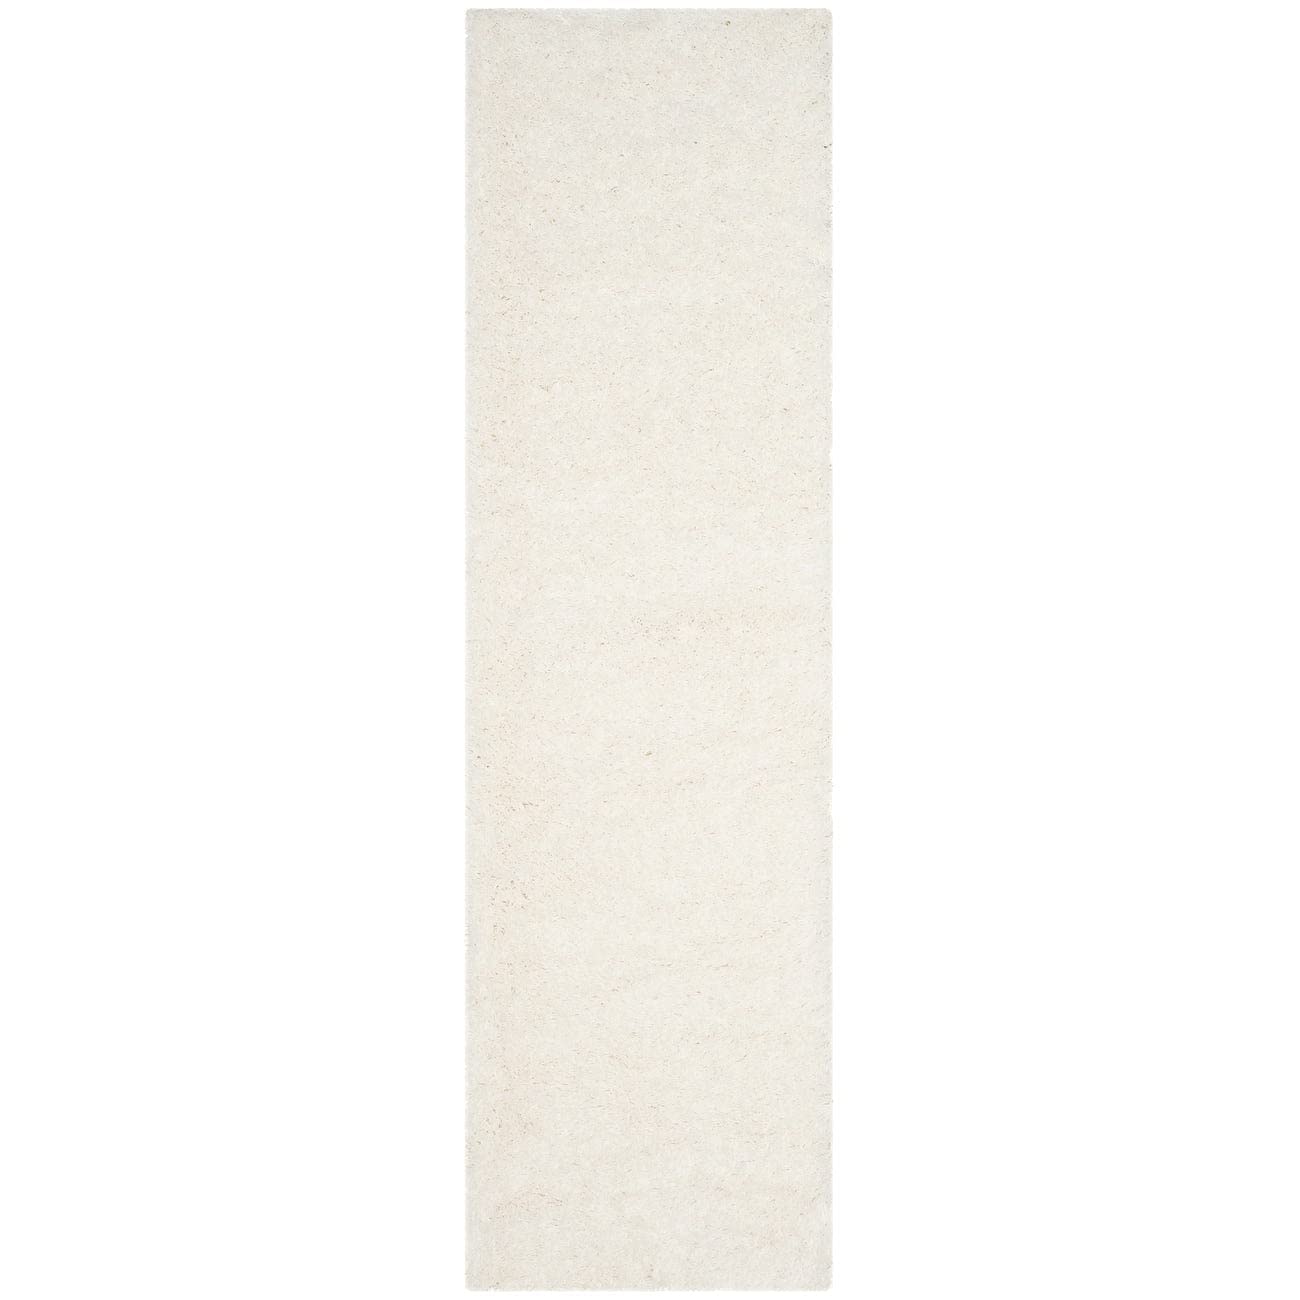 Safavieh Polar Shag 系列长条地毯 - 2'3' x 6'，白色，纯色迷人设计，不脱落且易于护理，3 英寸厚，非常适合客厅、卧室的人流密集区域 (PSG800B)